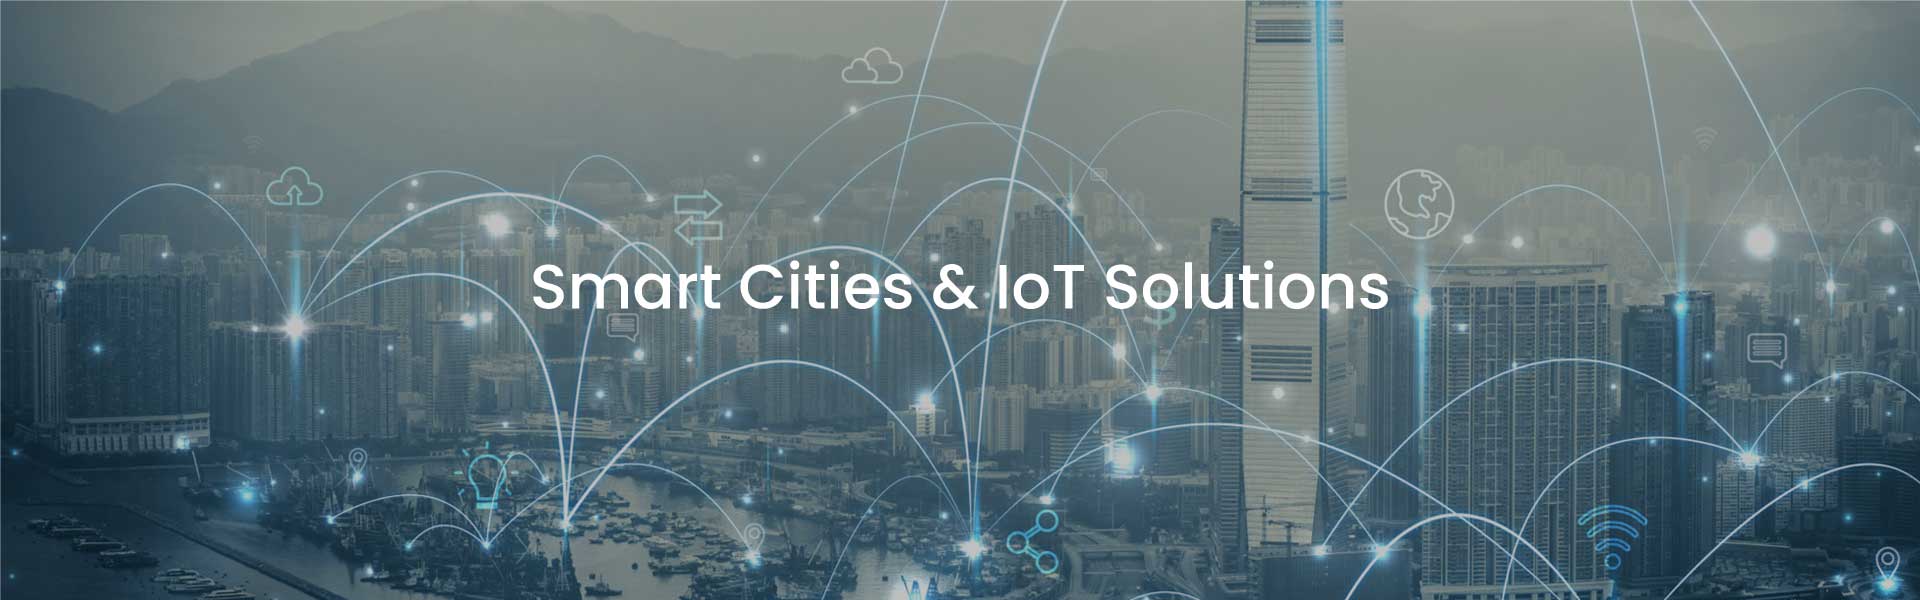 Open Source Standards in Smart Cities and IoT